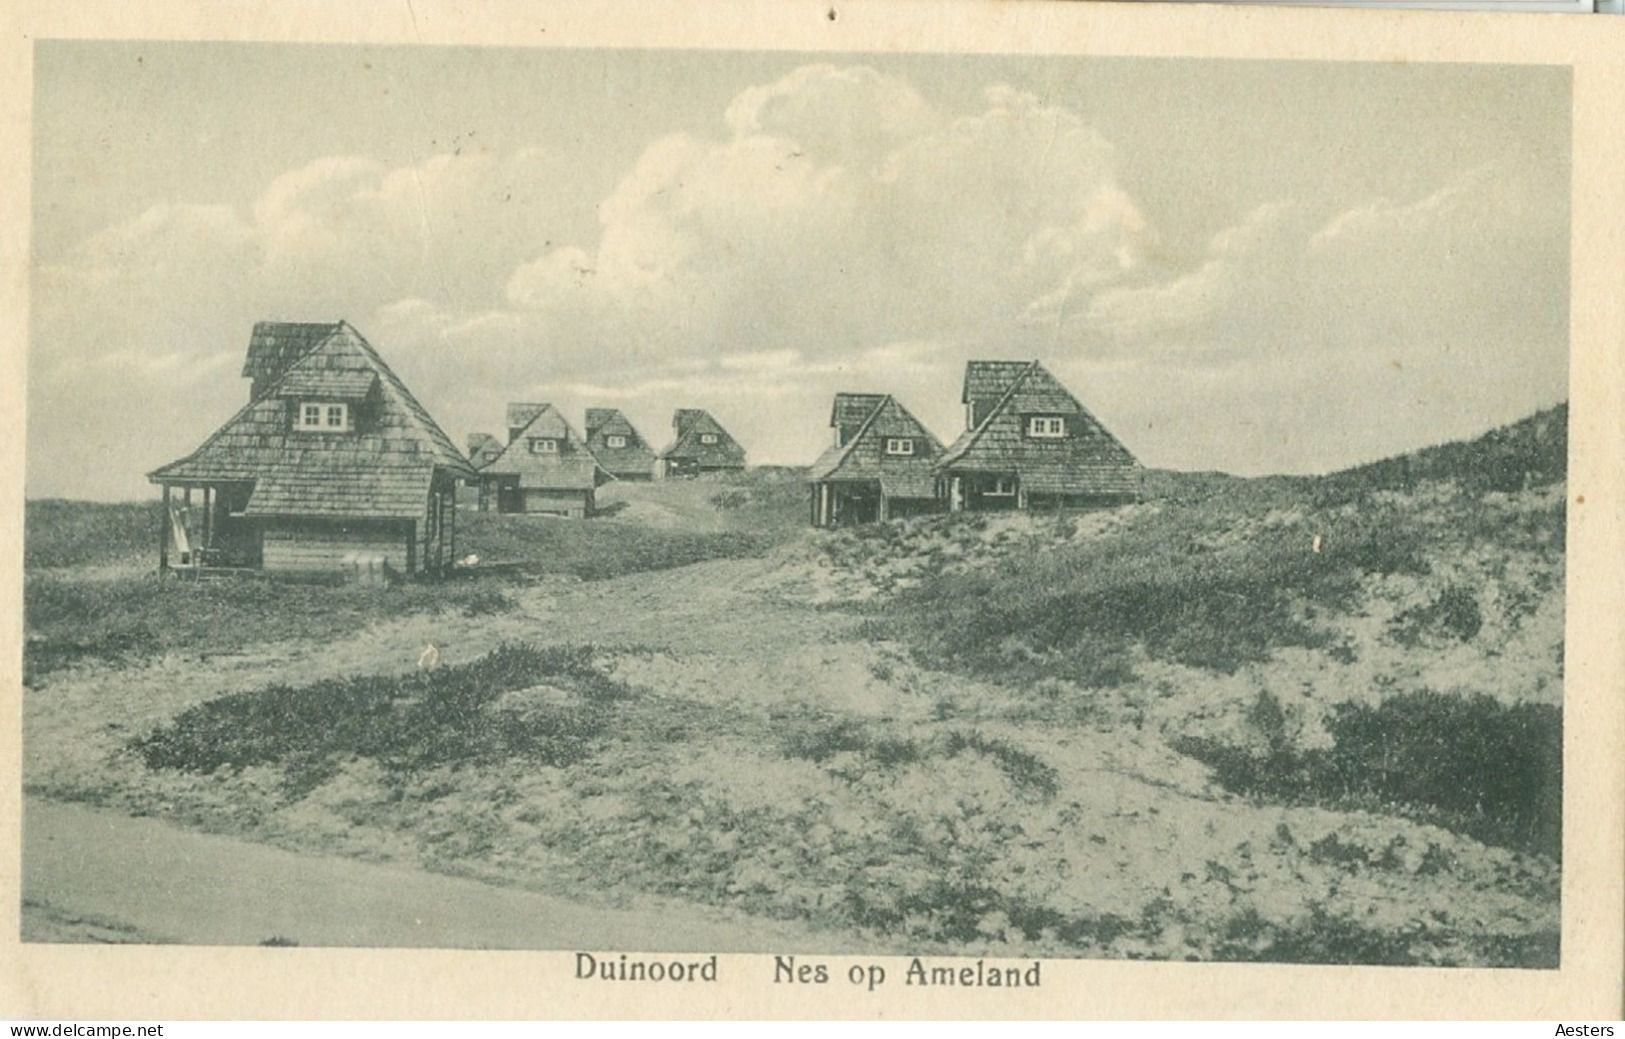 Ameland; Nes - Duinoord (zomerhuizen) - Gelopen. (G. J. Scheltema) - Ameland